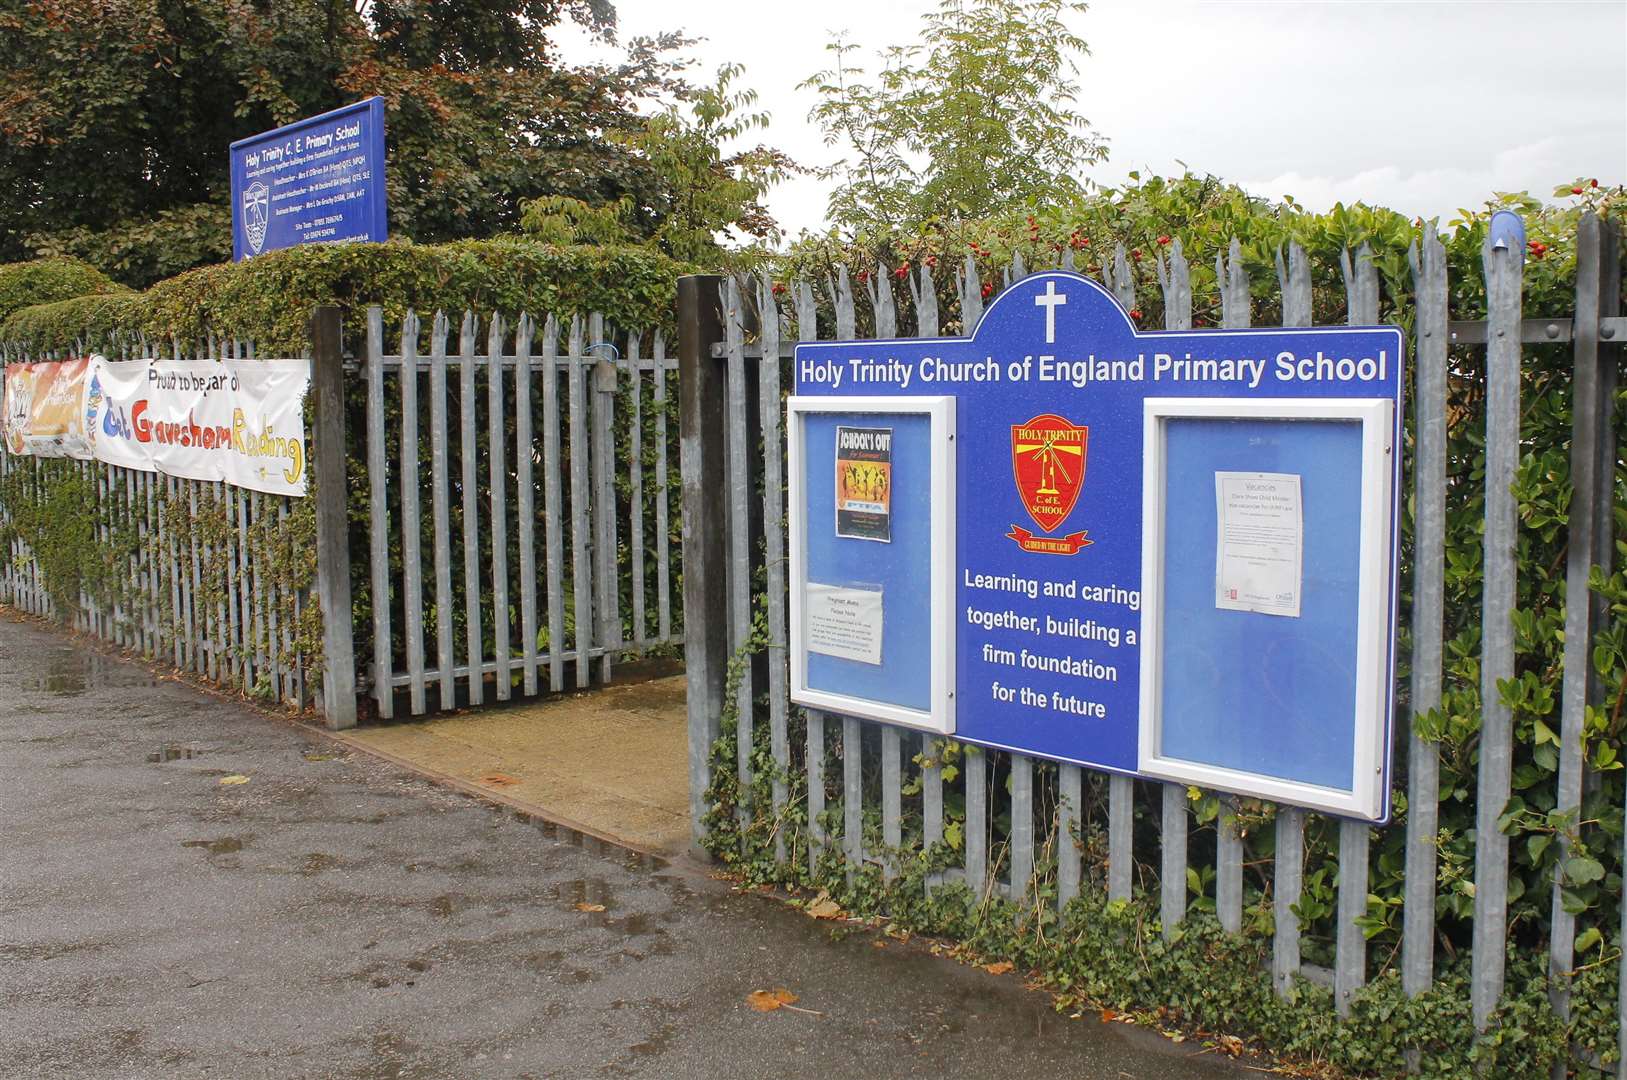 Holy Trinity Primary School in Gravesend